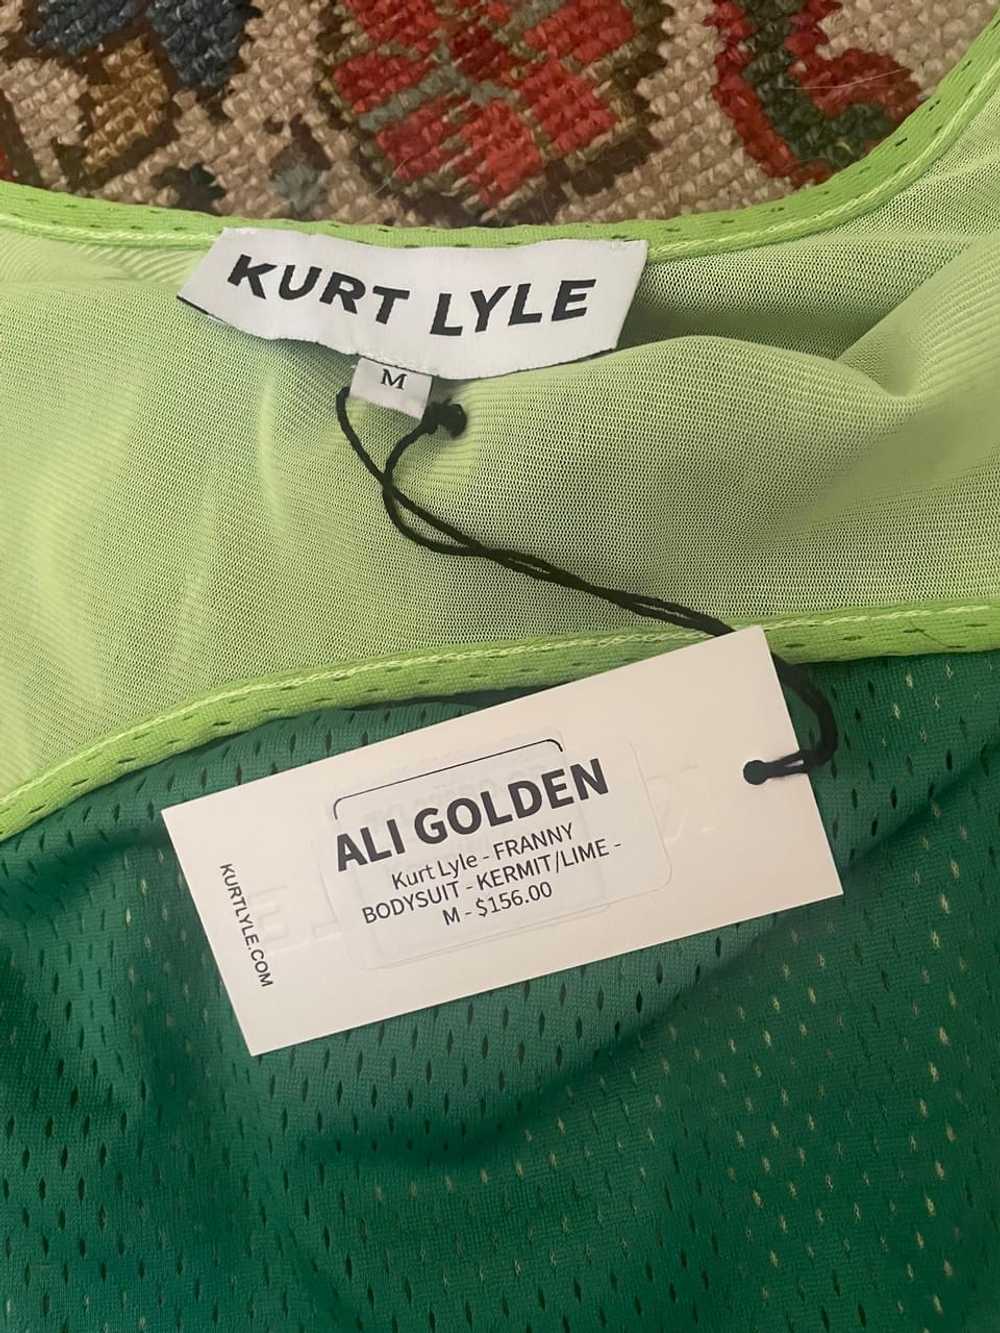 Kurt Lyle Franny BodySuit in Kermit/Lime (M) - image 3